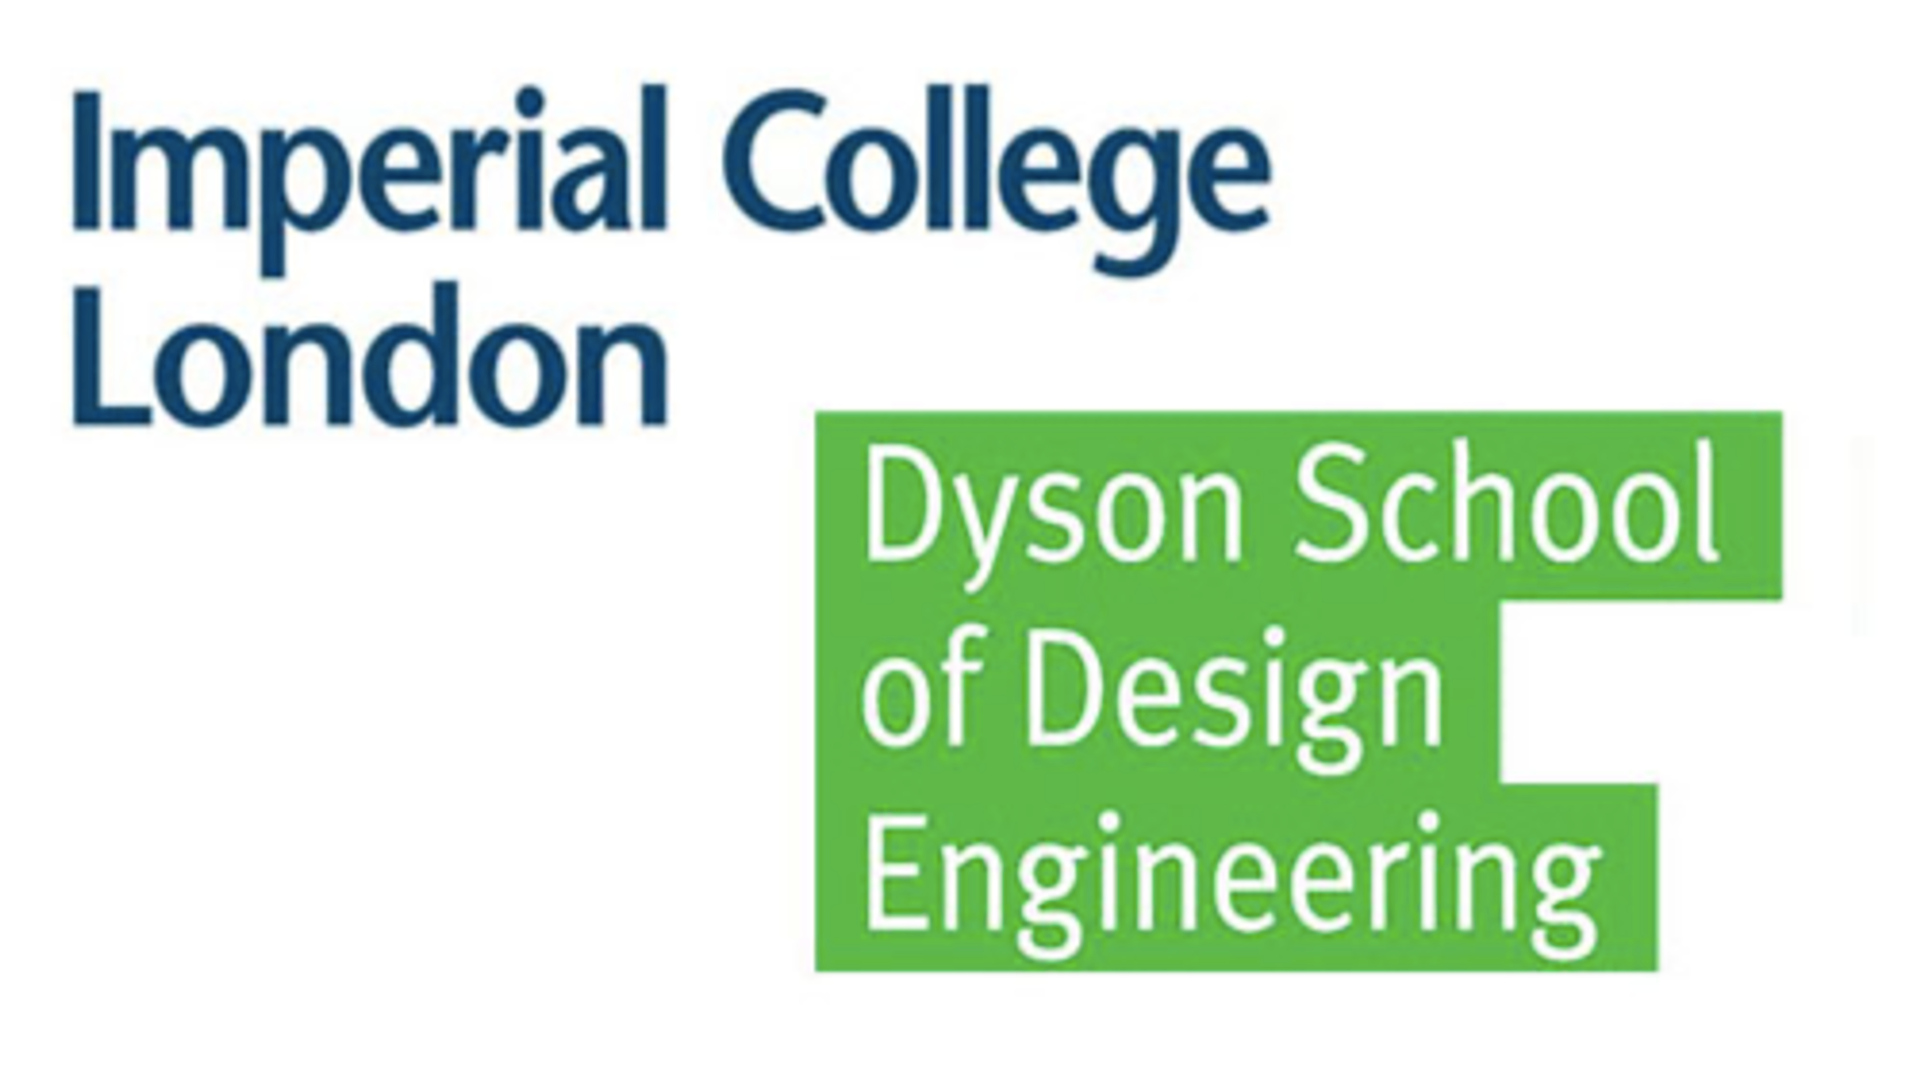 Dyson School School of Design Engineering 'DESIRE' award for Social Impact